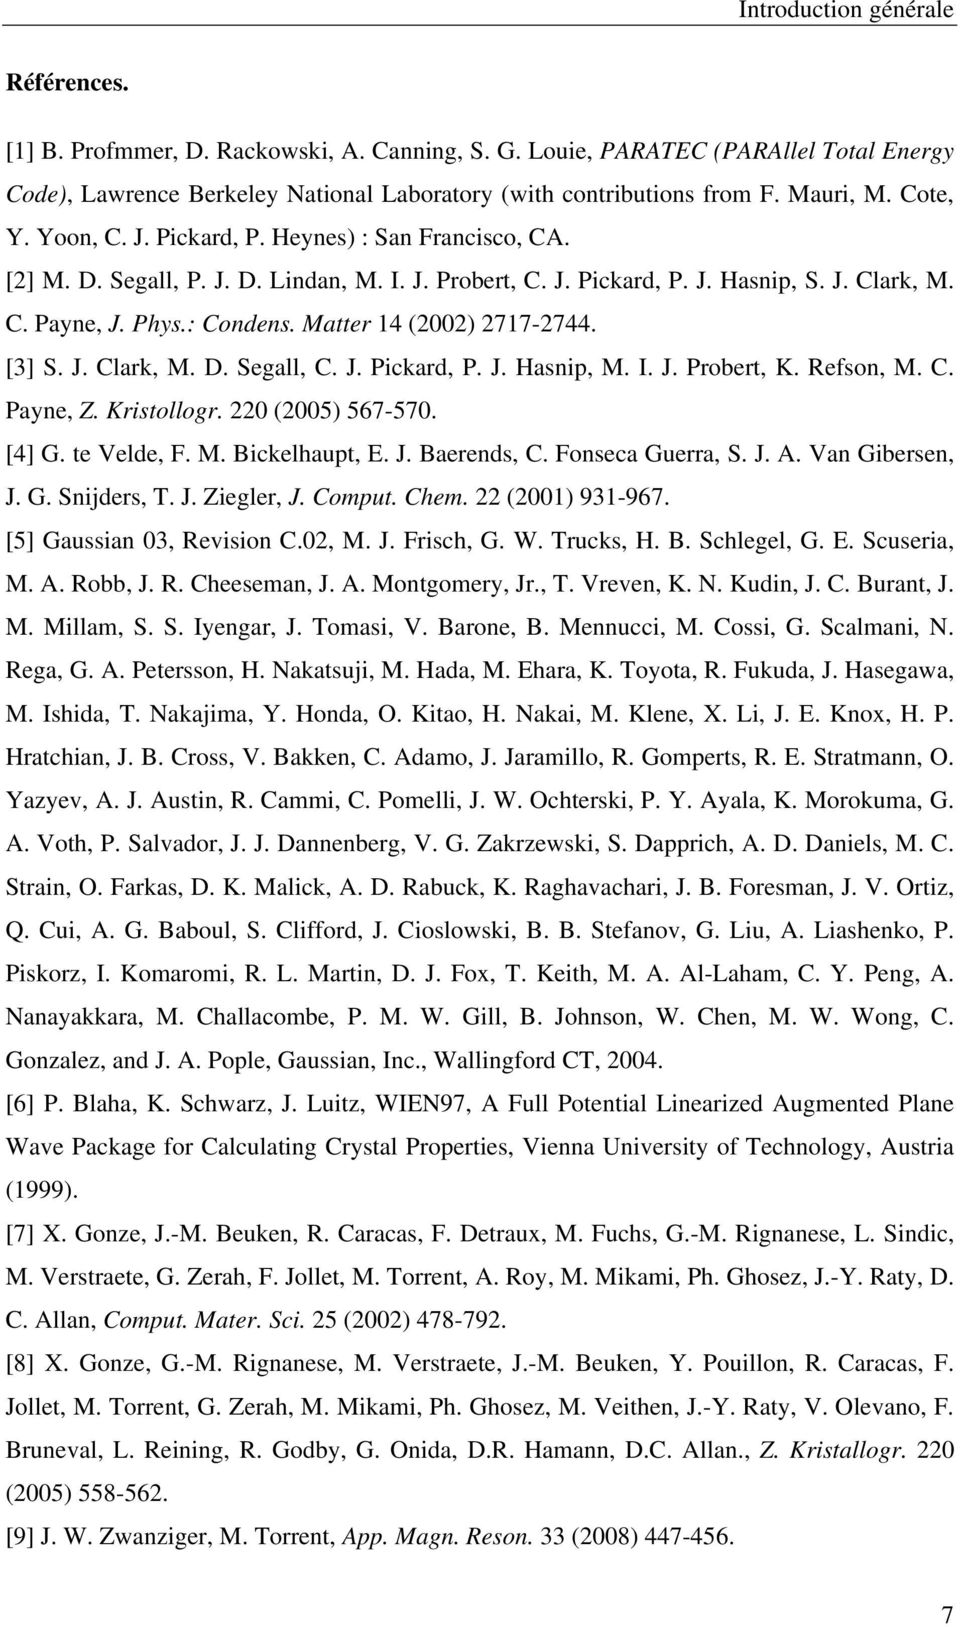 Matter 14 (00) 717-744. [3] S. J. Clark, M. D. Segall, C. J. Pickard, P. J. Hasnip, M. I. J. Probert, K. Refson, M. C. Payne, Z. Kristollogr. 0 (005) 567-570. [4] G. te Velde, F. M. Bickelhaupt, E. J. Baerends, C.